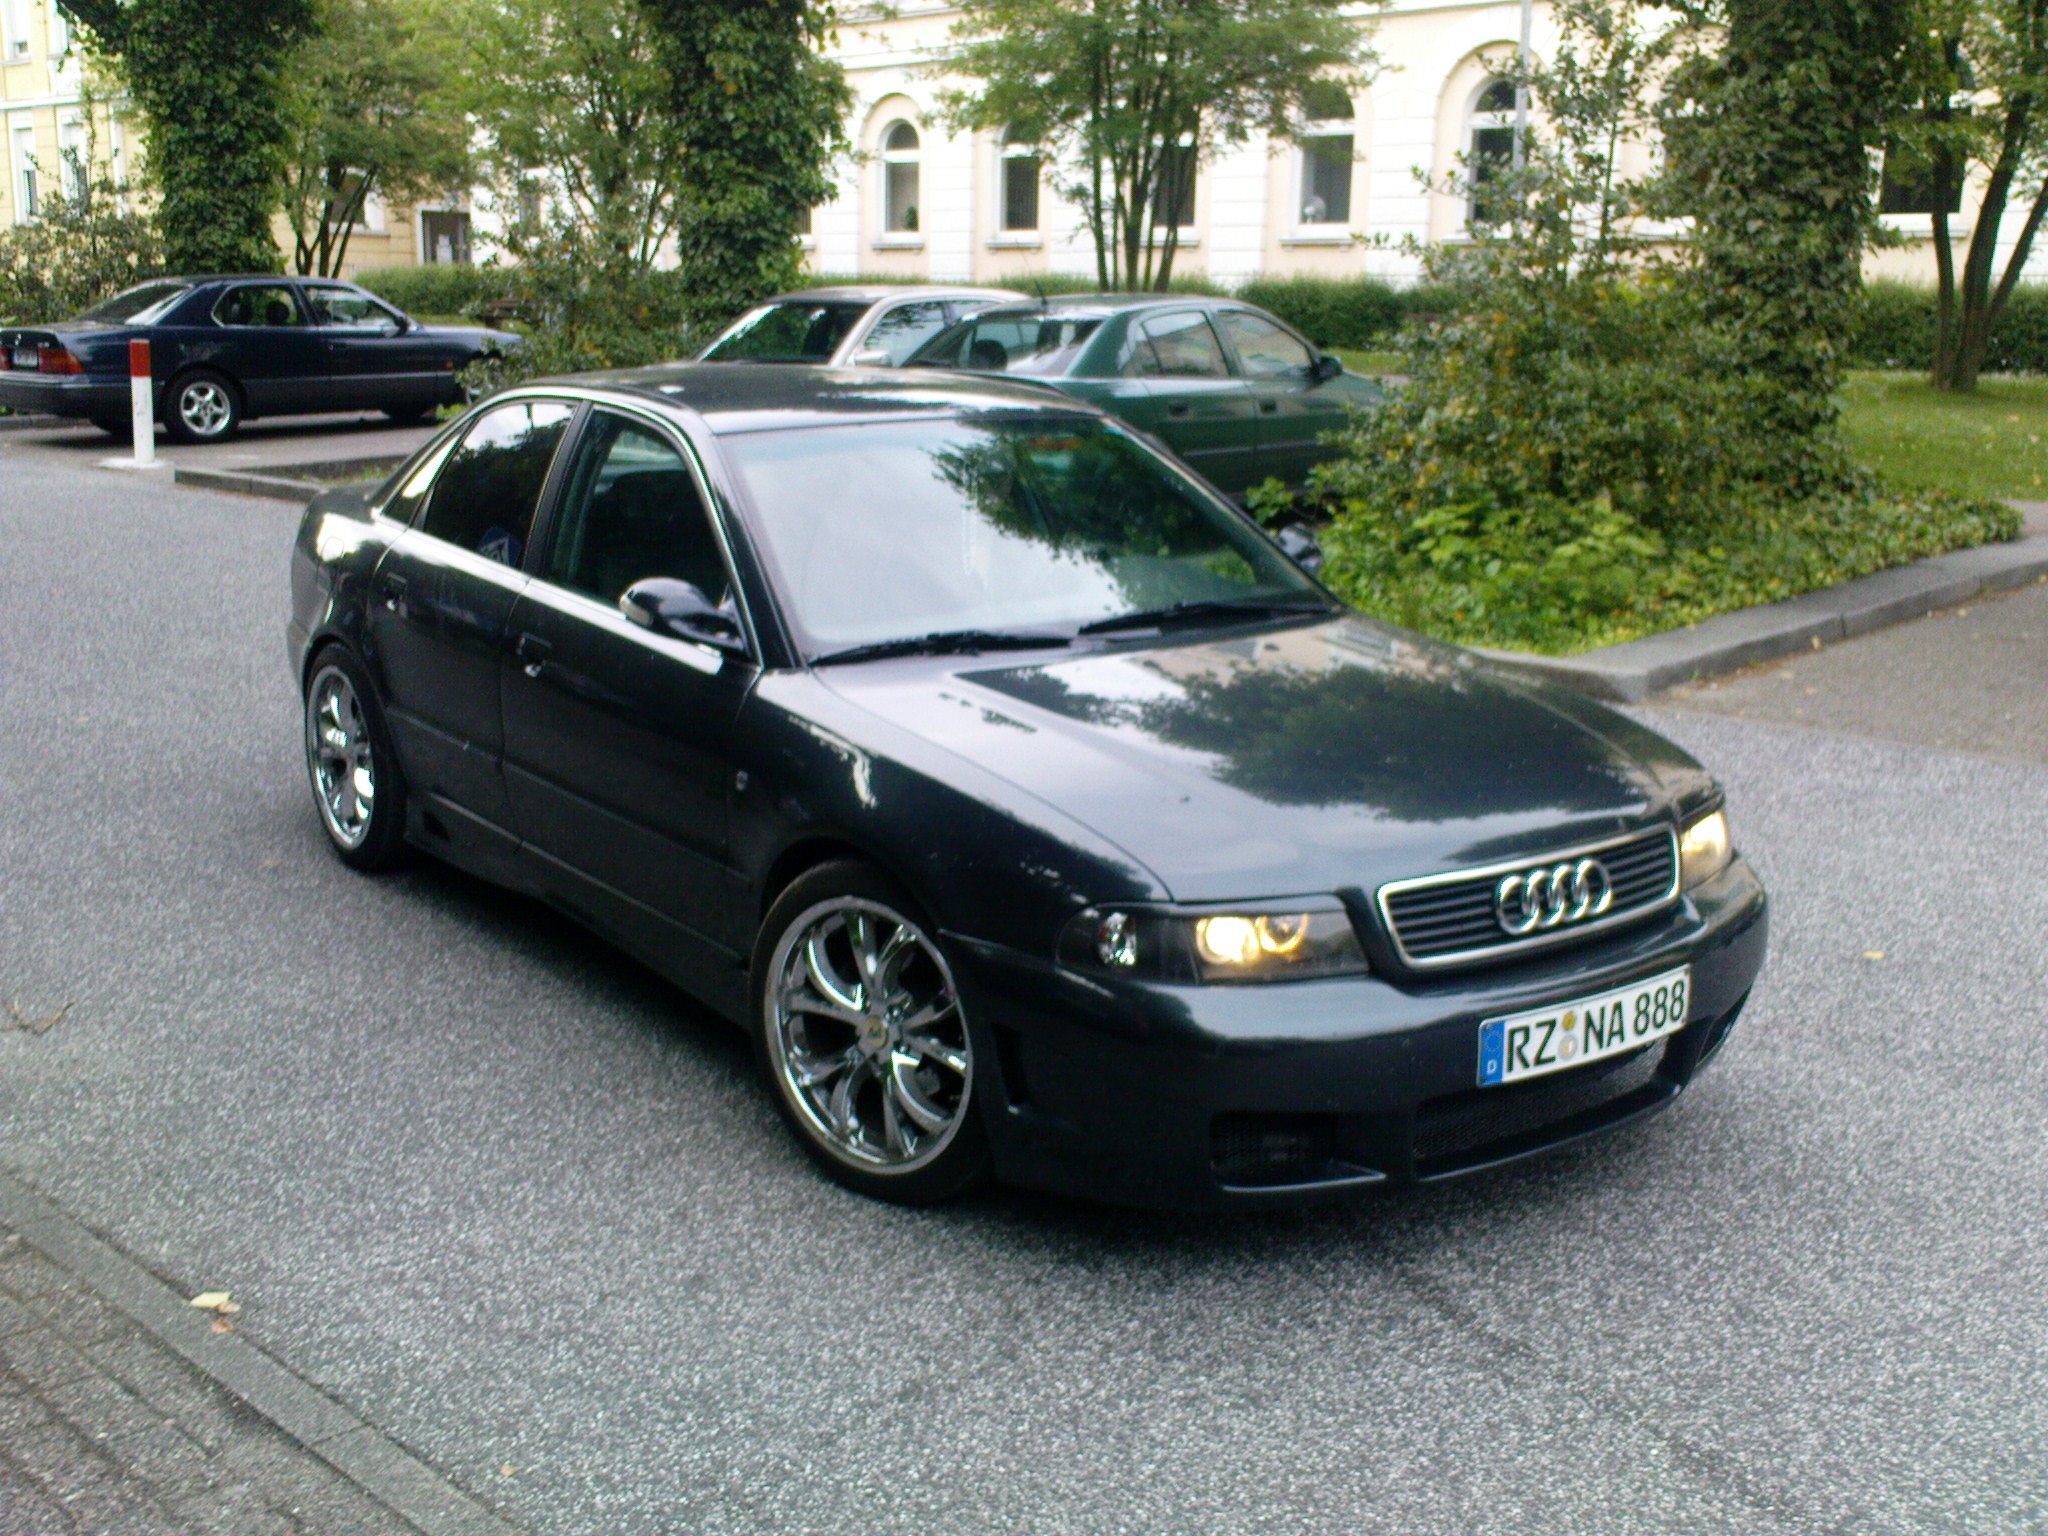 Купить ауди а 4 б 5. Audi a4 b5 2000. Audi a4 b5 1996. Audi a4 b5 1999. Audi a4 b5 1995.